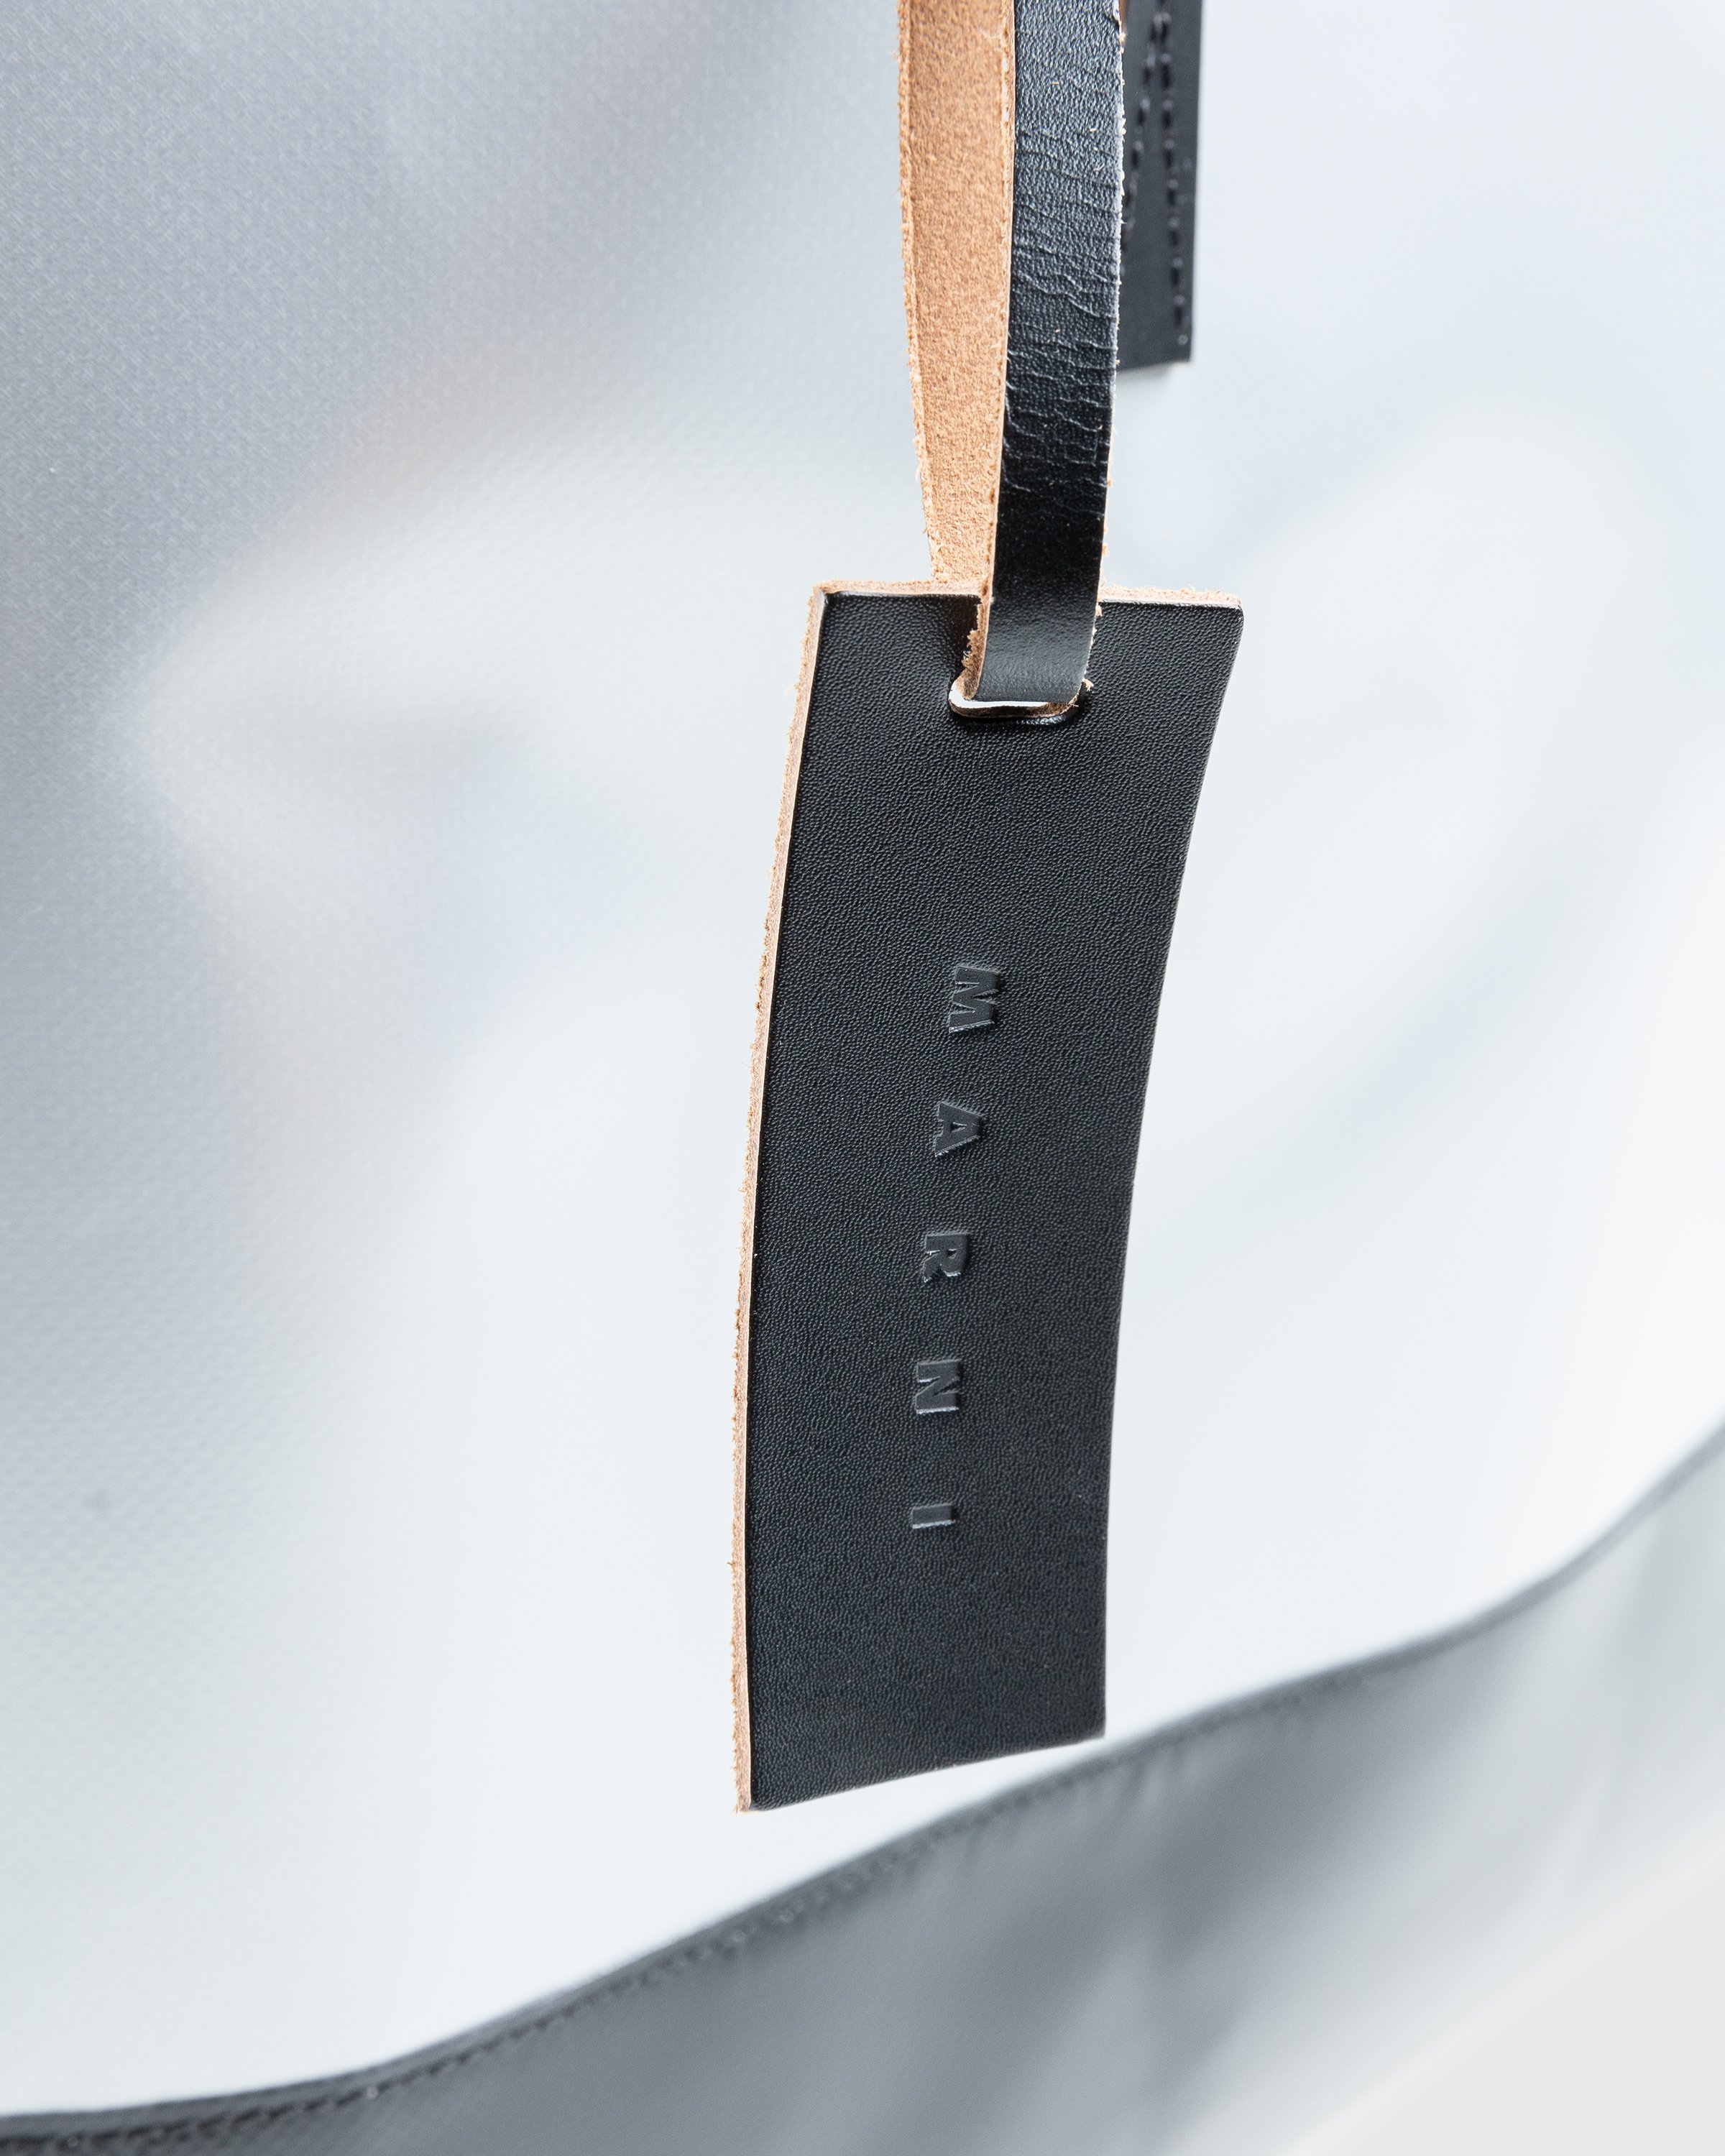 Marni - Tribeca Two-Tone Tote Bag Light Grey - Accessories - Multi - Image 5